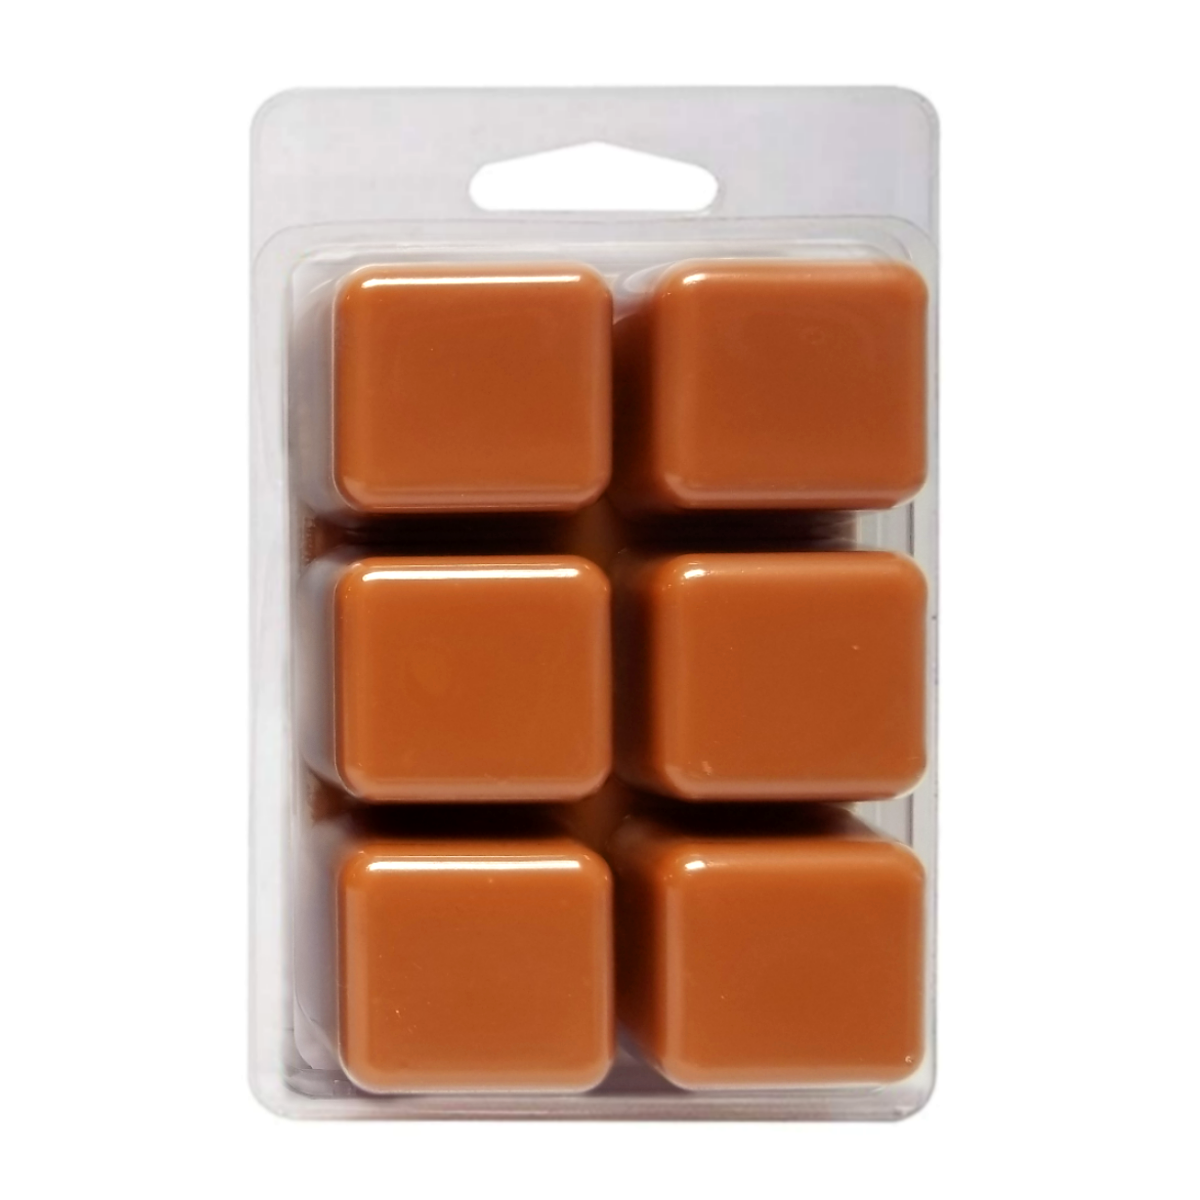 Chocolate Amber - 3.2 oz Clamshell